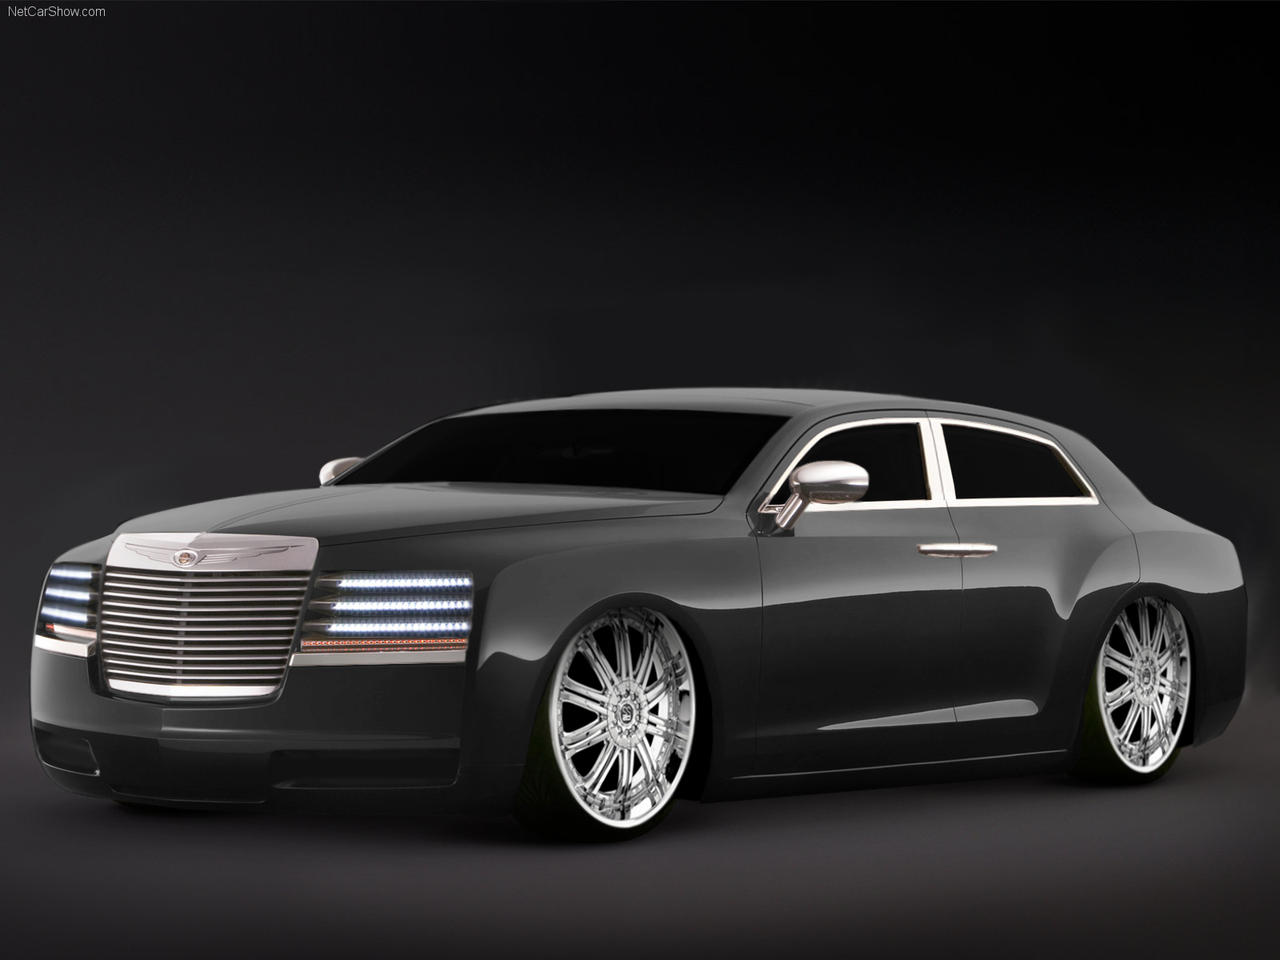 2011 Chrysler imperial concept #1